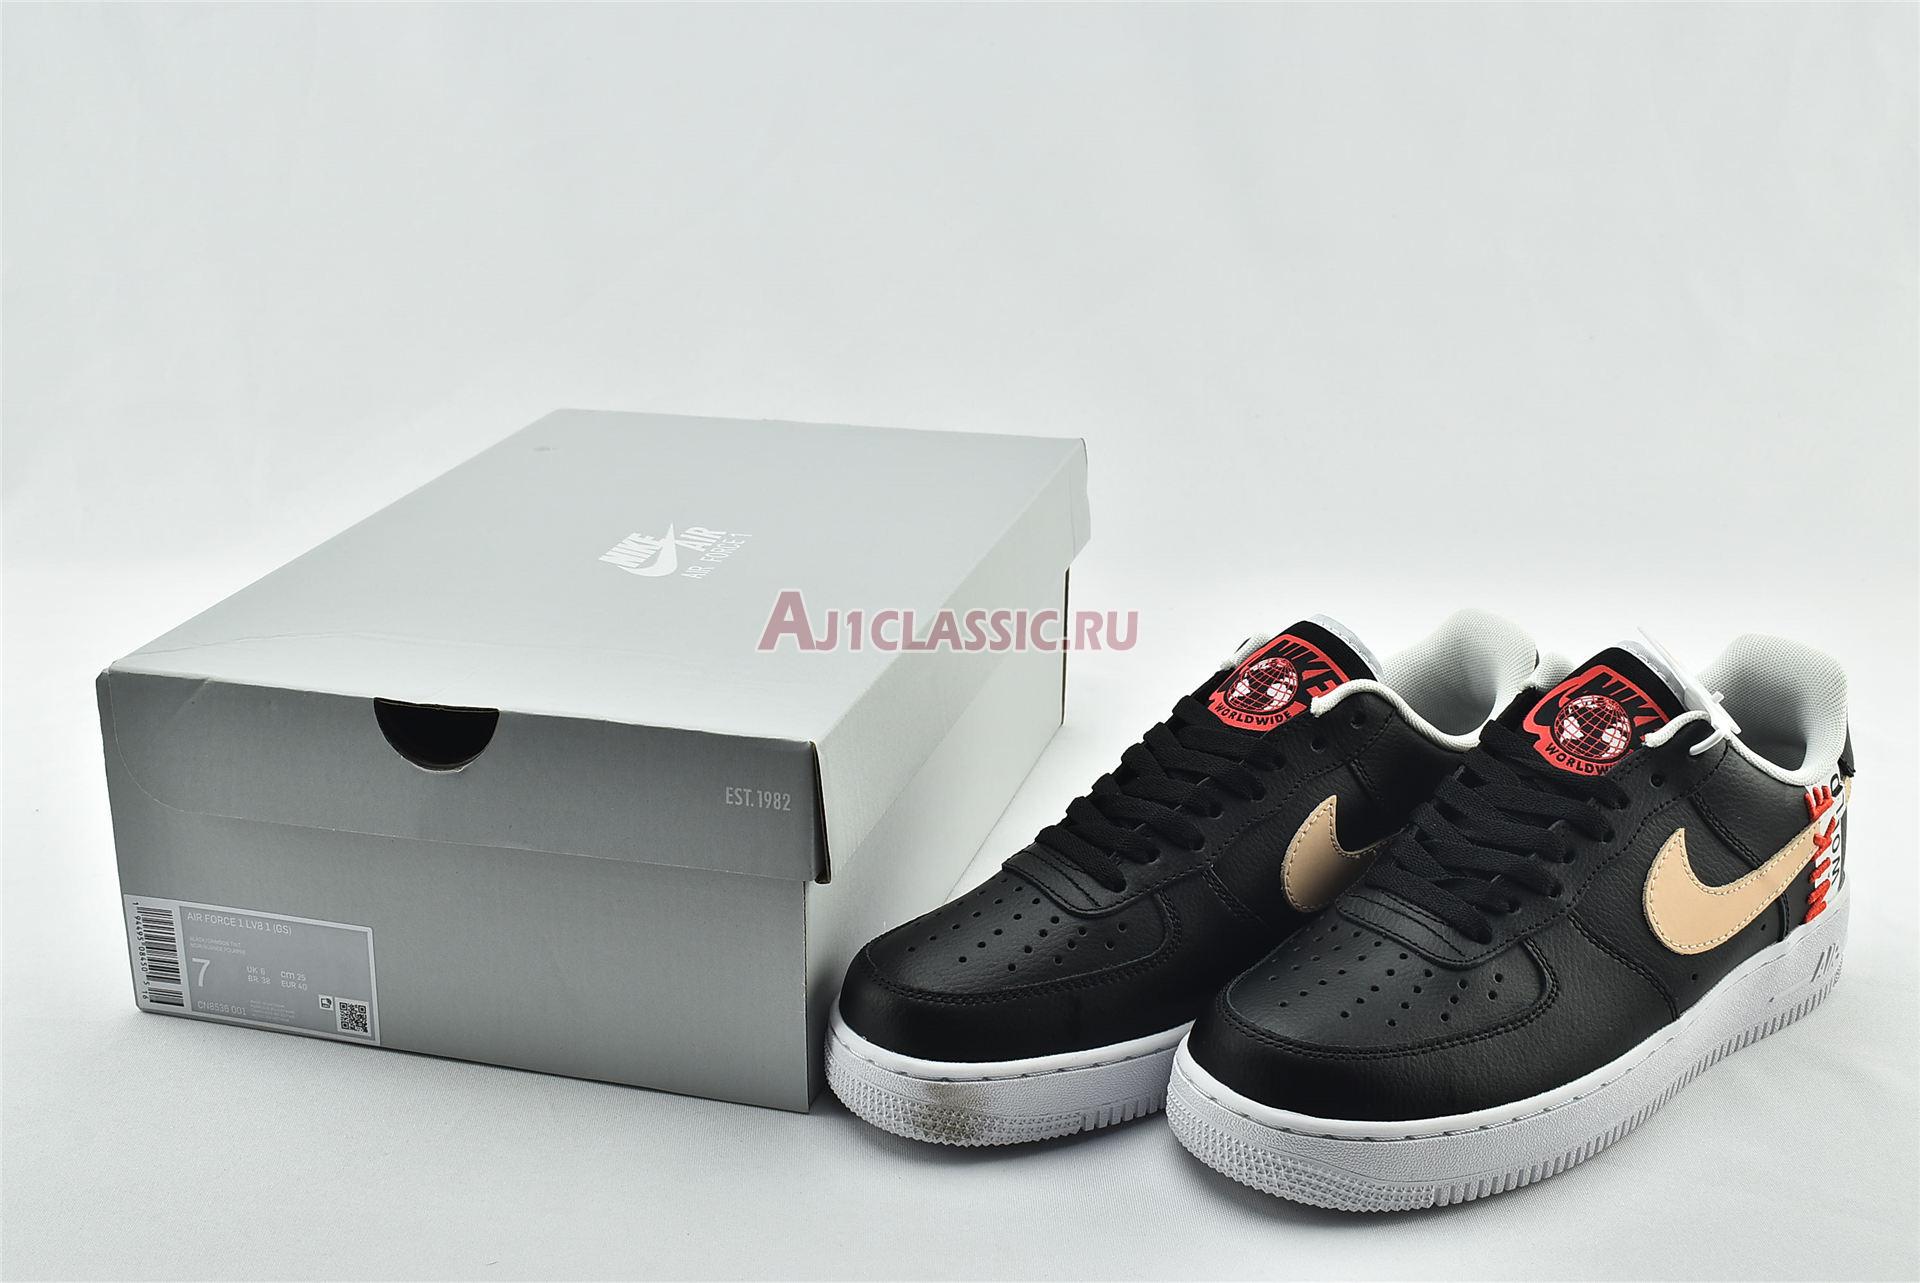 Nike Air Force 1 LV8 1 Worldwide Pack - Black Crimson CN8536-001 Black/Flash Crimson/White/Crimson Tint Sneakers